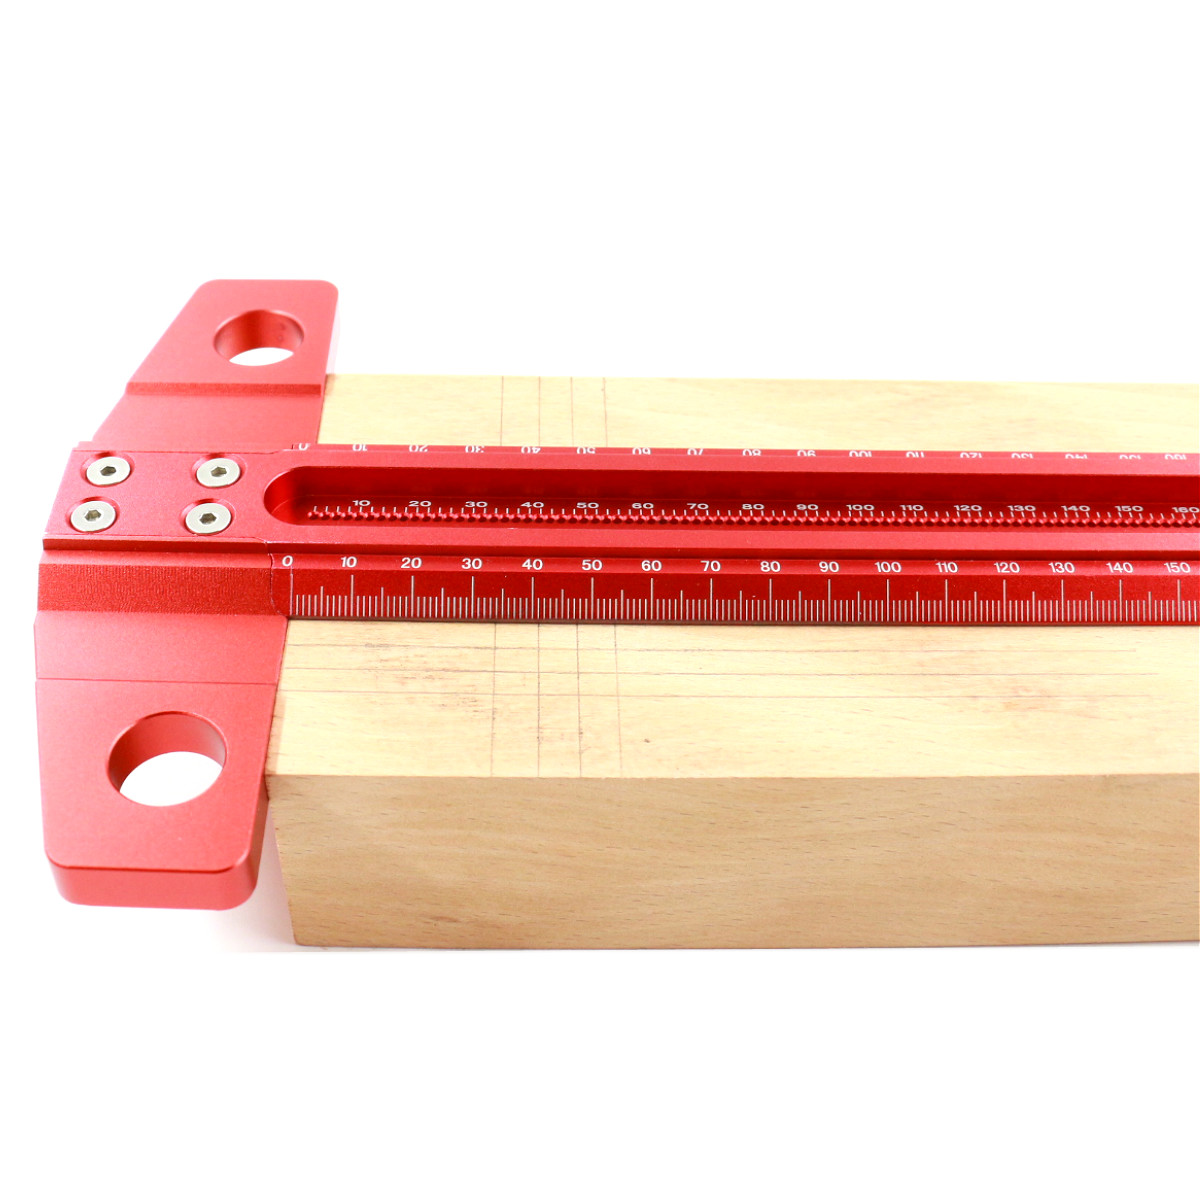 ETOPOO-Woodworking-T-type-Line-Scriber-Hole-Scale-Ruler-Aluminum-Alloy-Marking-Gauge-Crossed-Line-Sc-1798711-9